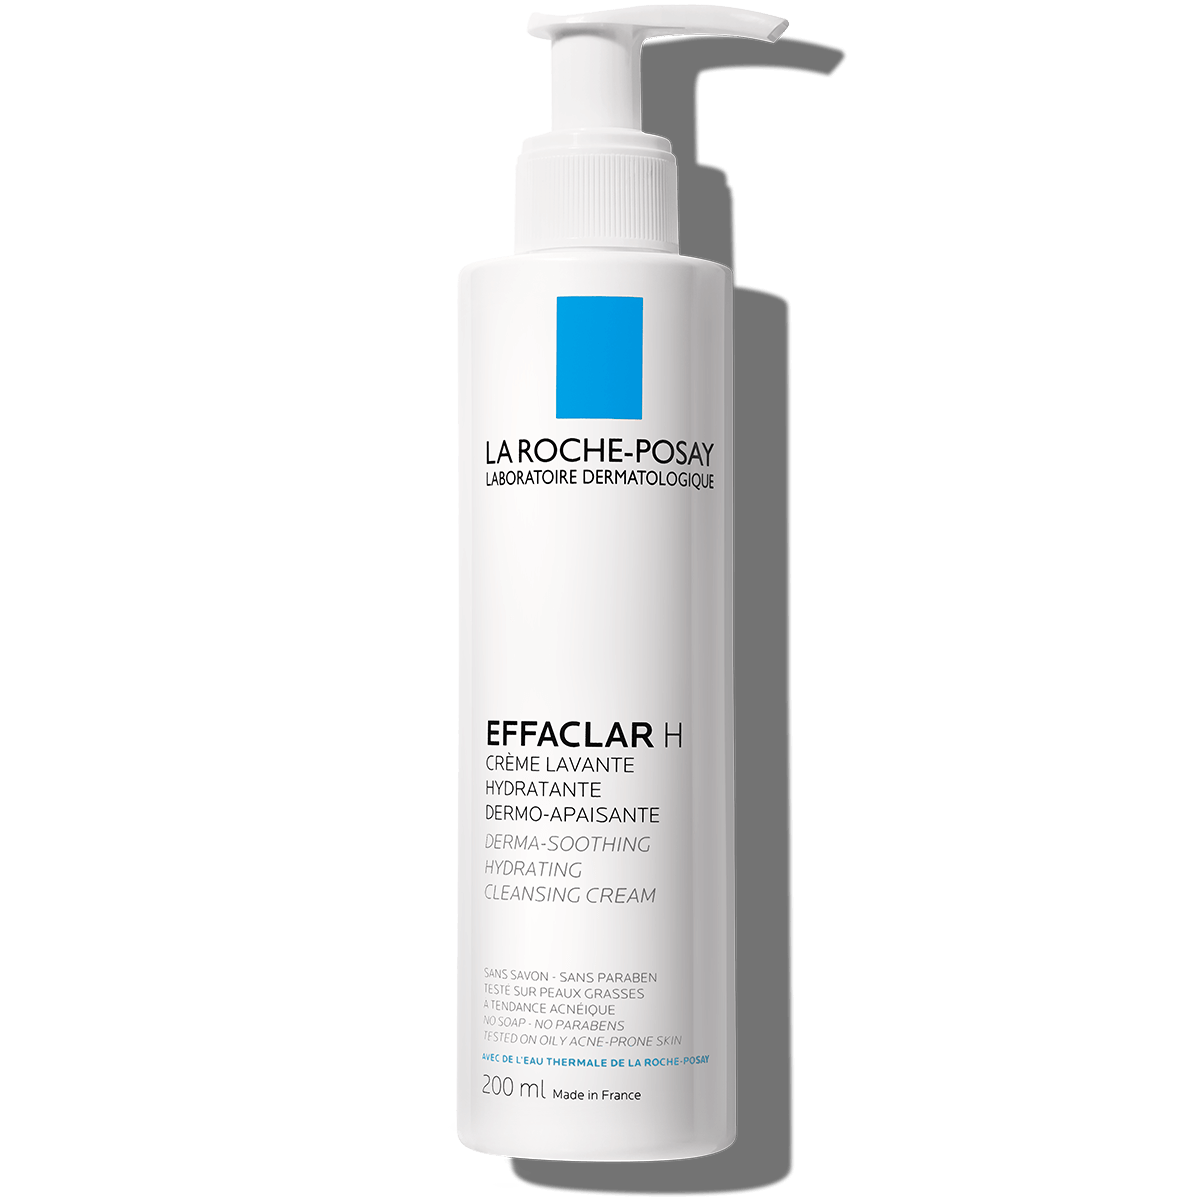 La Roche Posay Kasvojen puhdistustuote Effaclar H Cleansing Cream 200ml 33378753